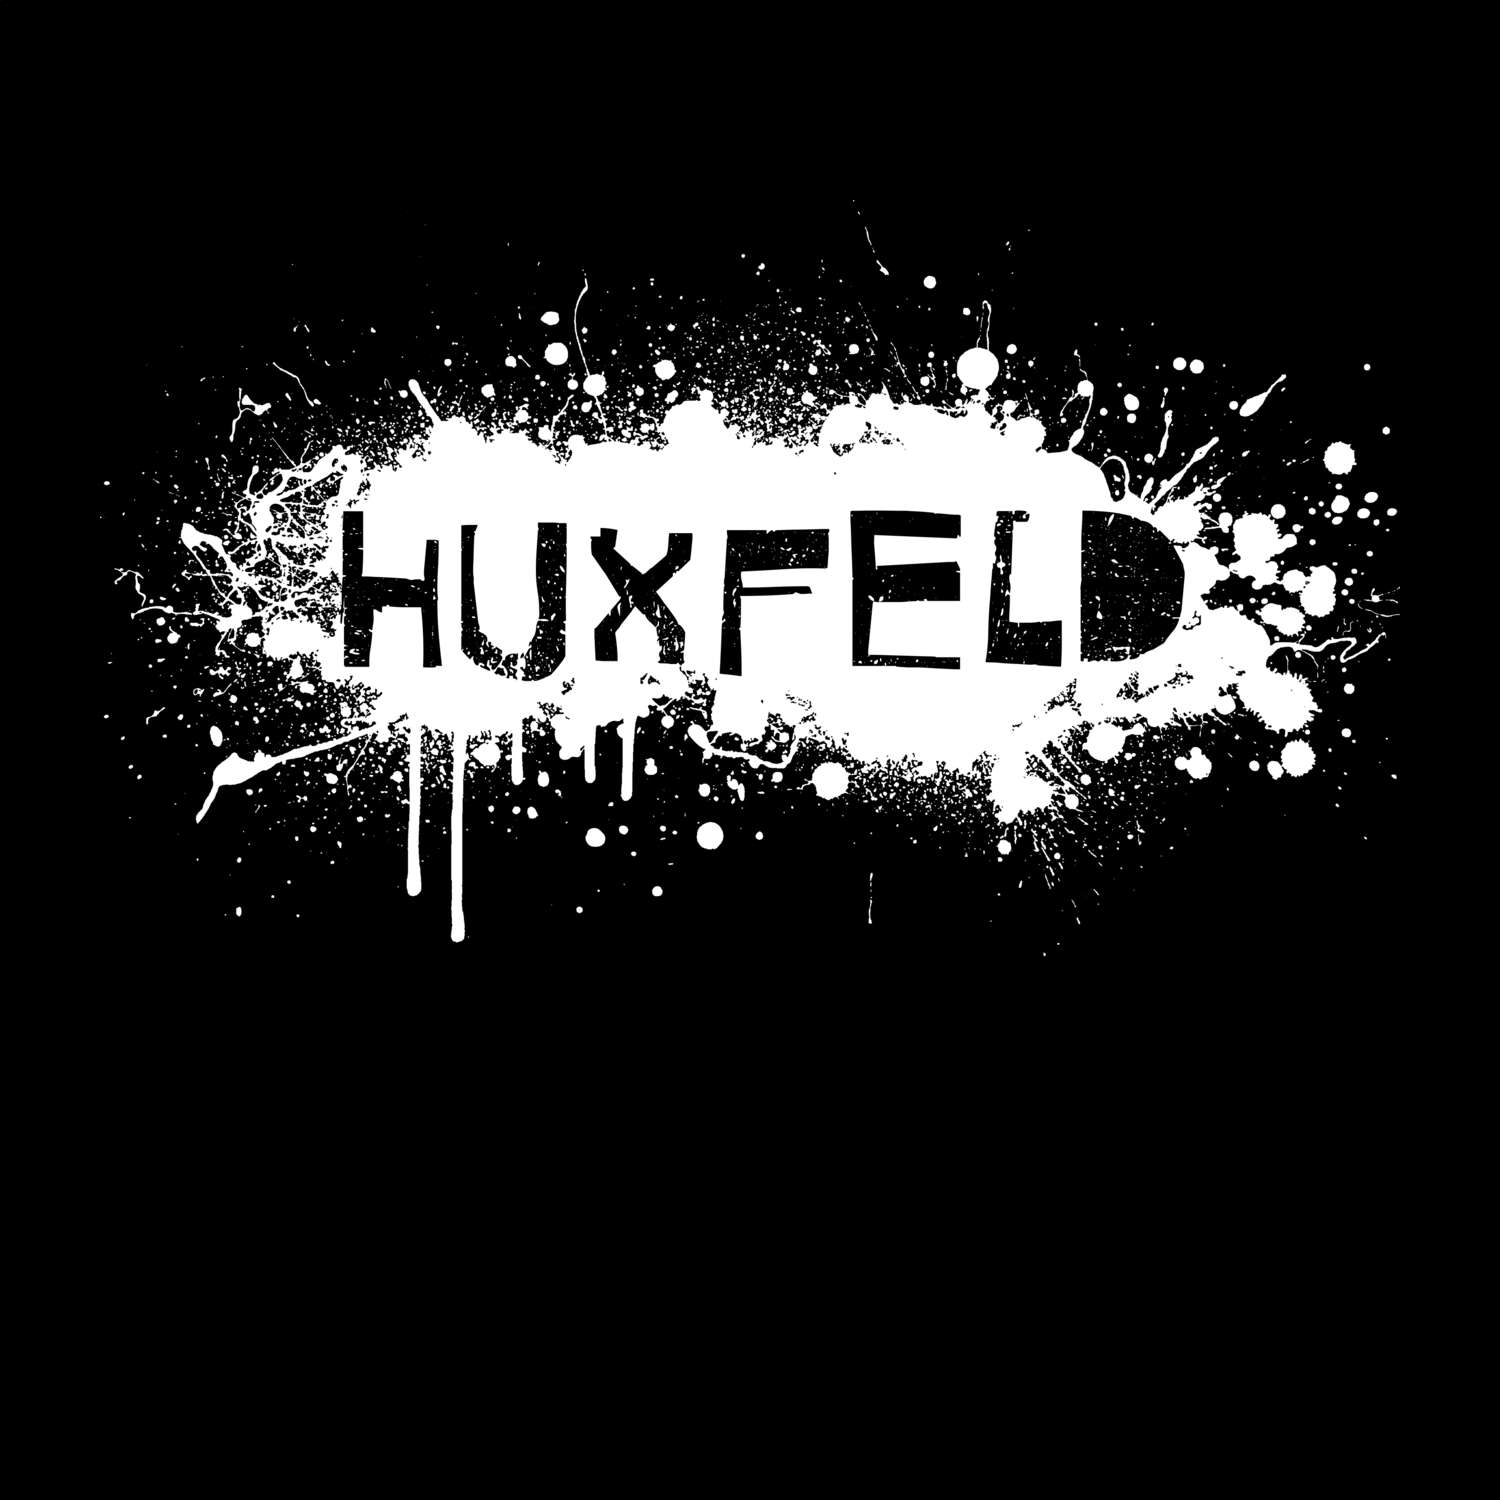 Huxfeld T-Shirt »Paint Splash Punk«